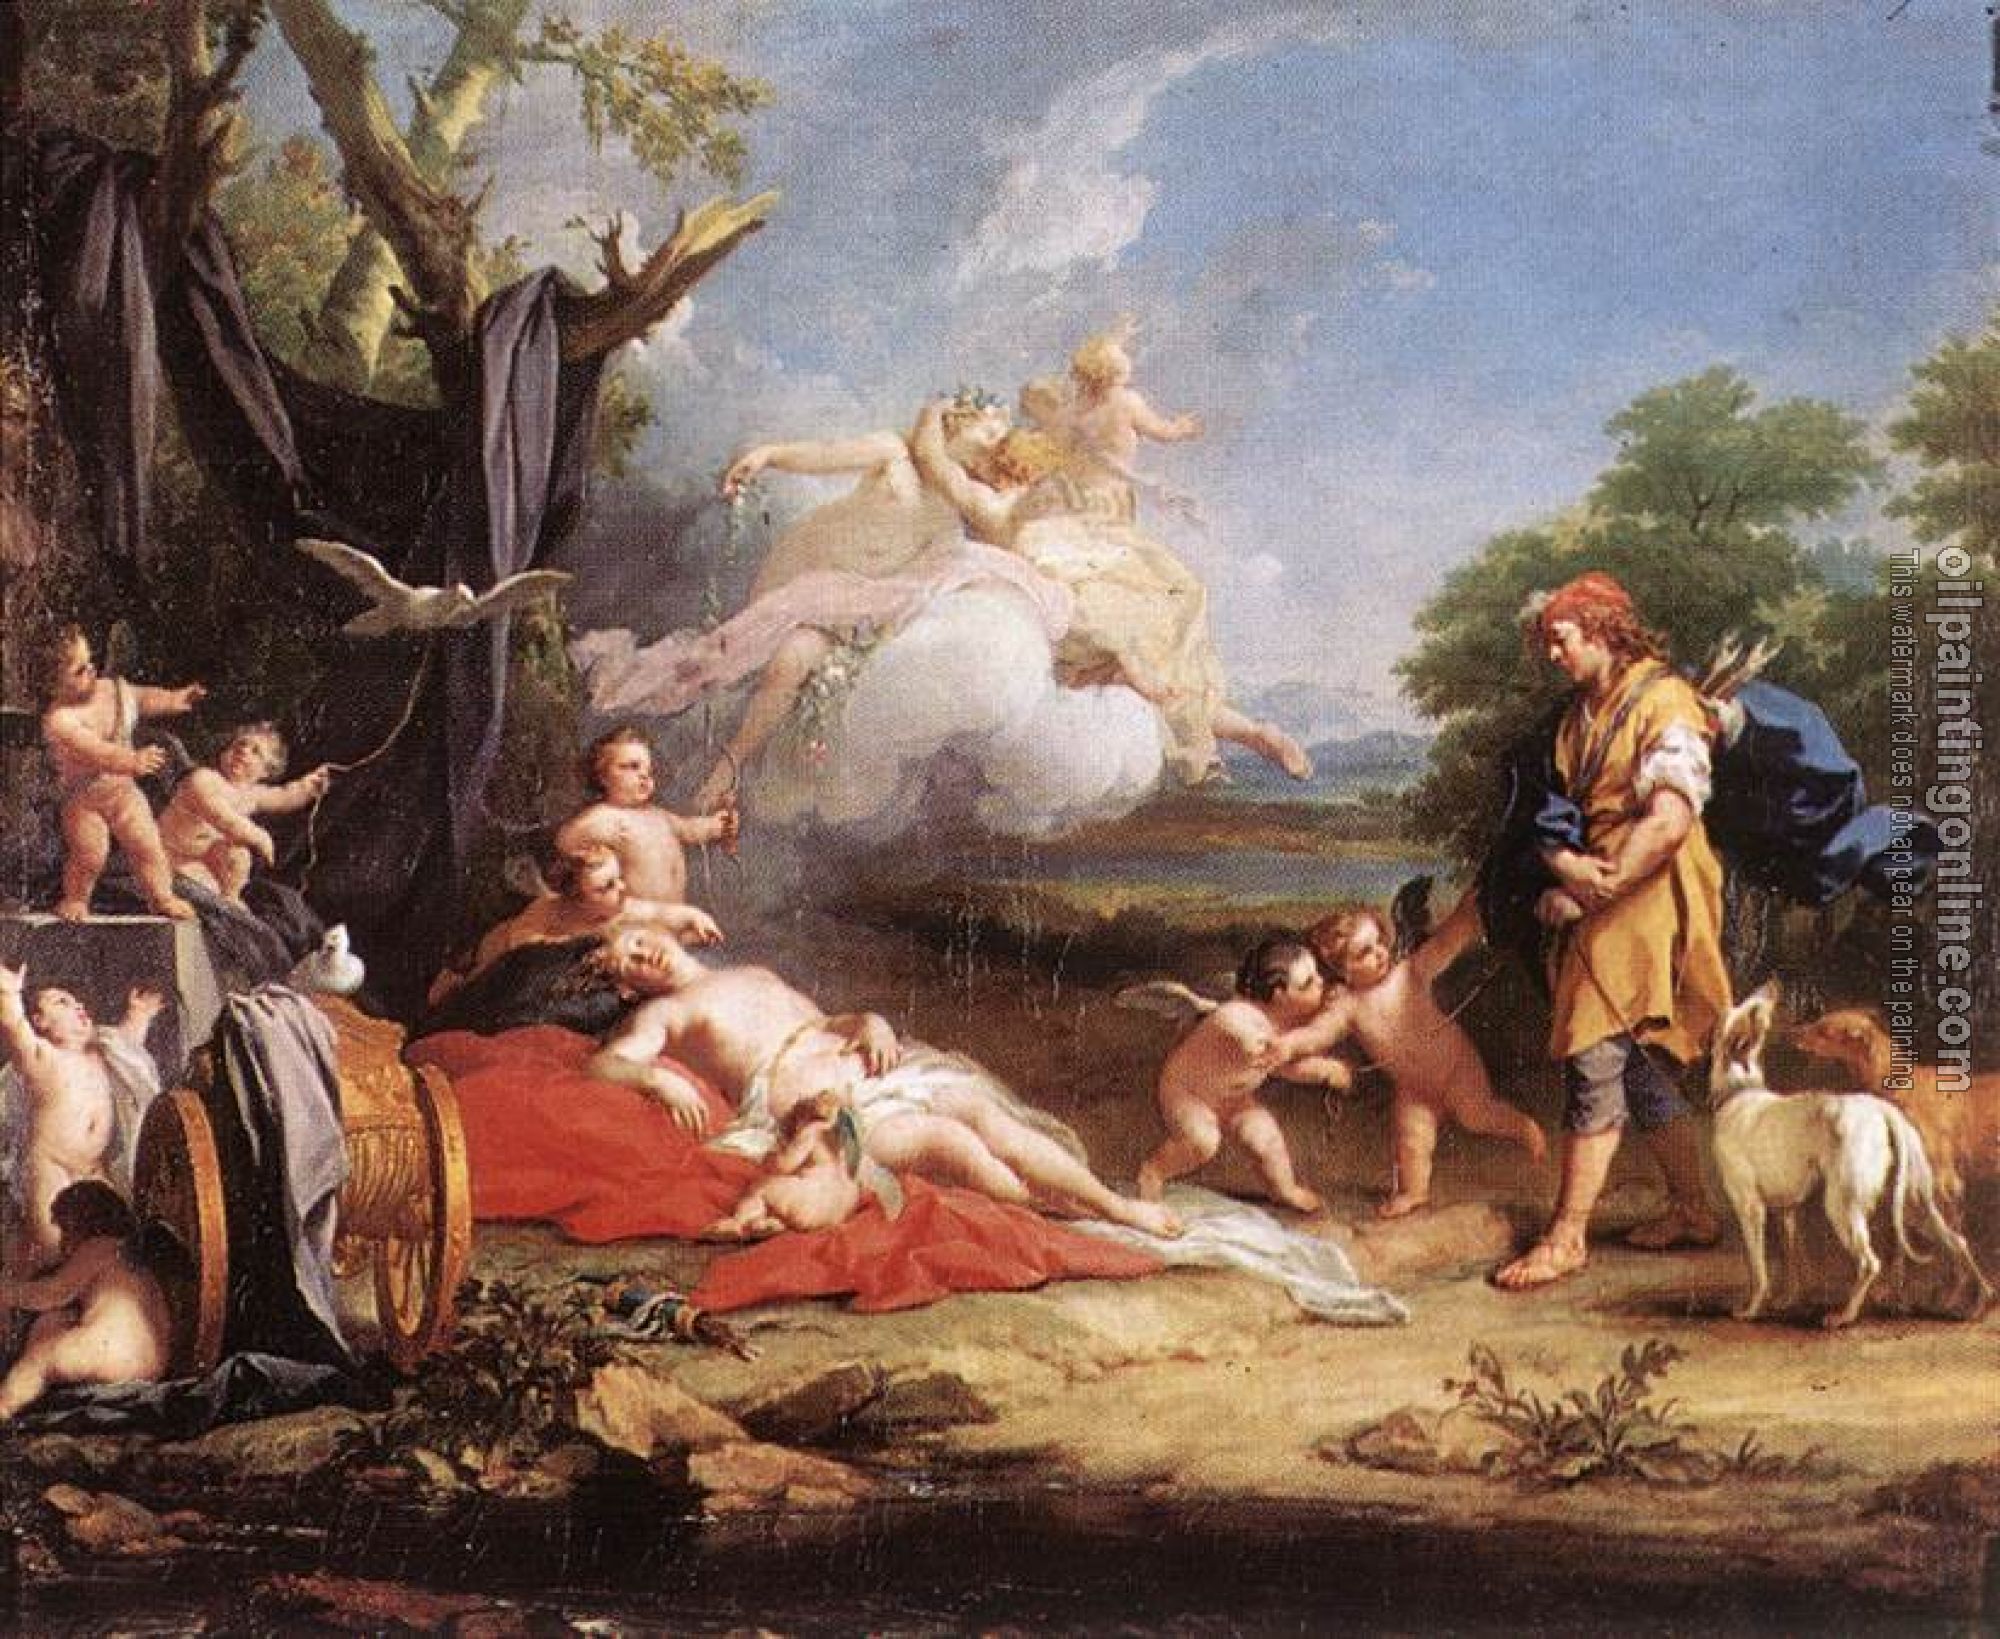 Amigoni, Jacopo - Venus and Adonis